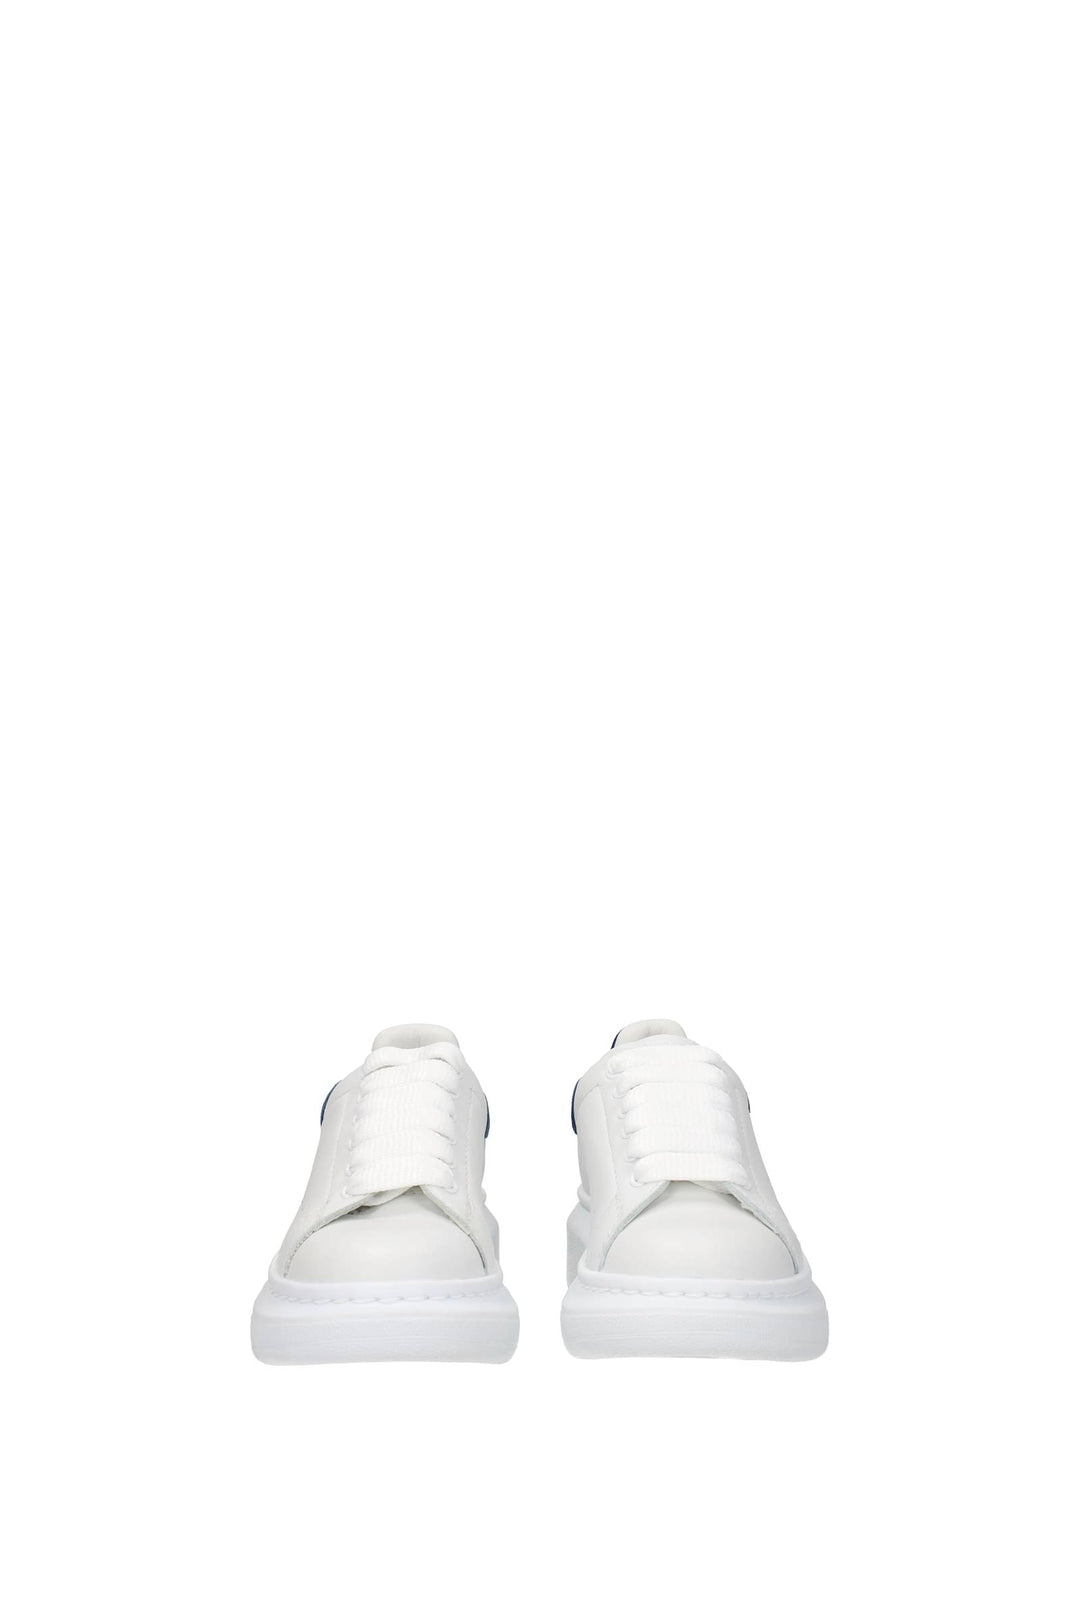 Idee Regalo Sneakers Kids Pelle Bianco Blu - Alexander McQueen - Uomo